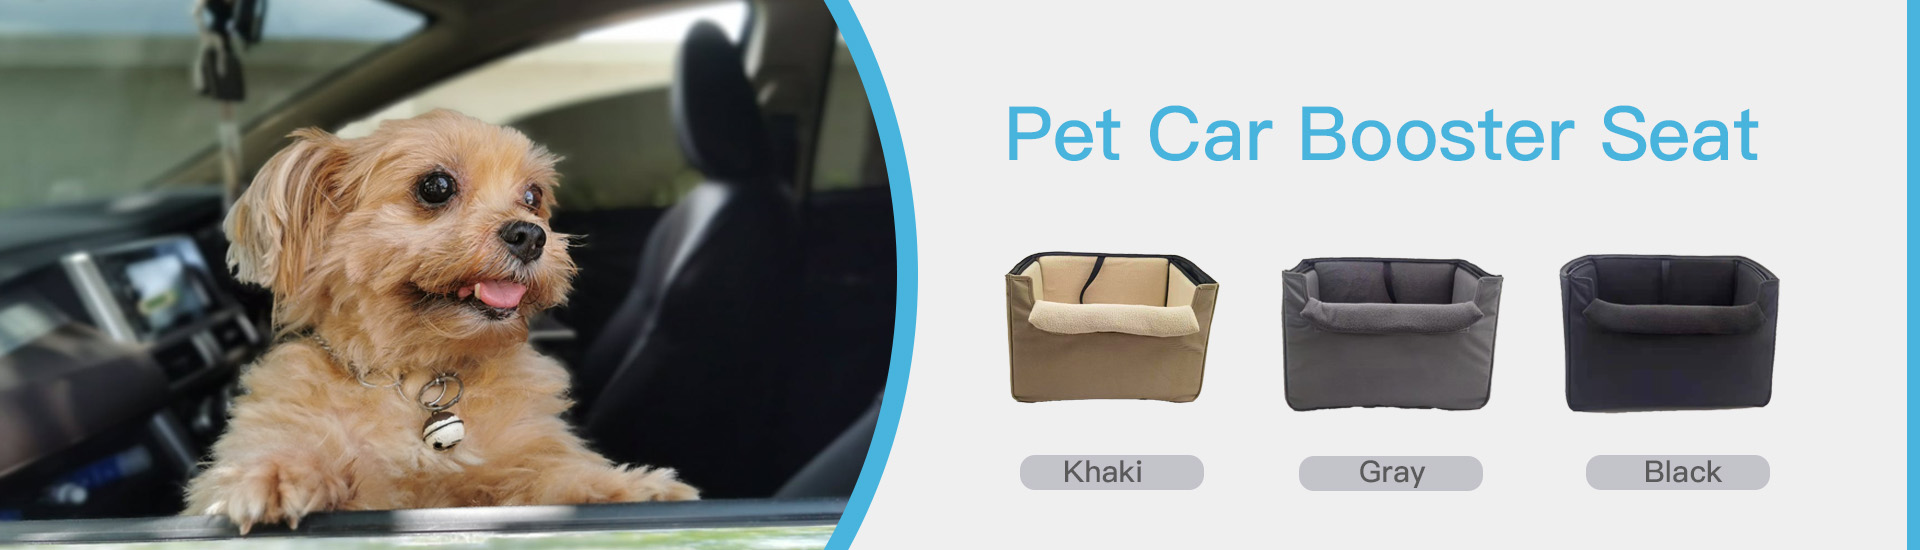 Raised Pet Car Booster Seat 